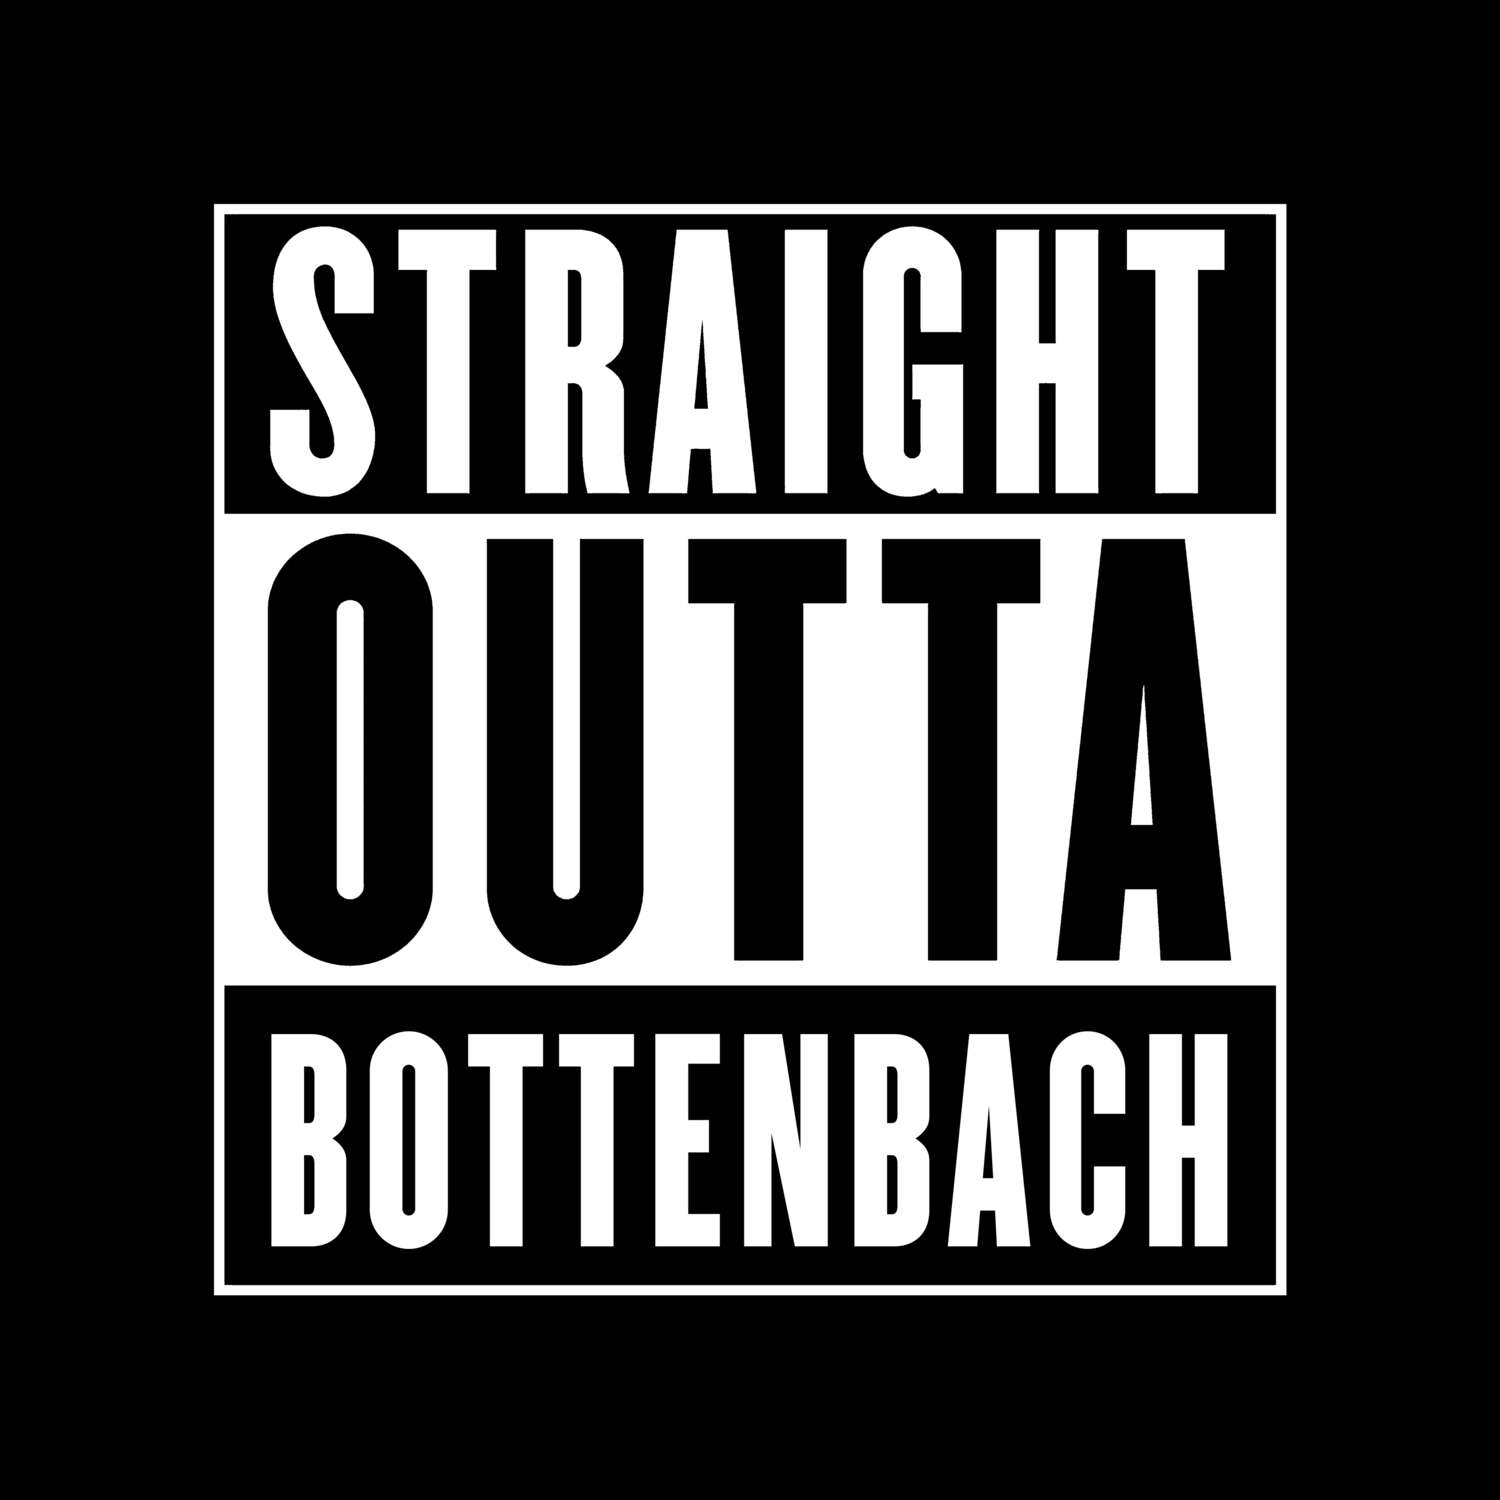 Bottenbach T-Shirt »Straight Outta«